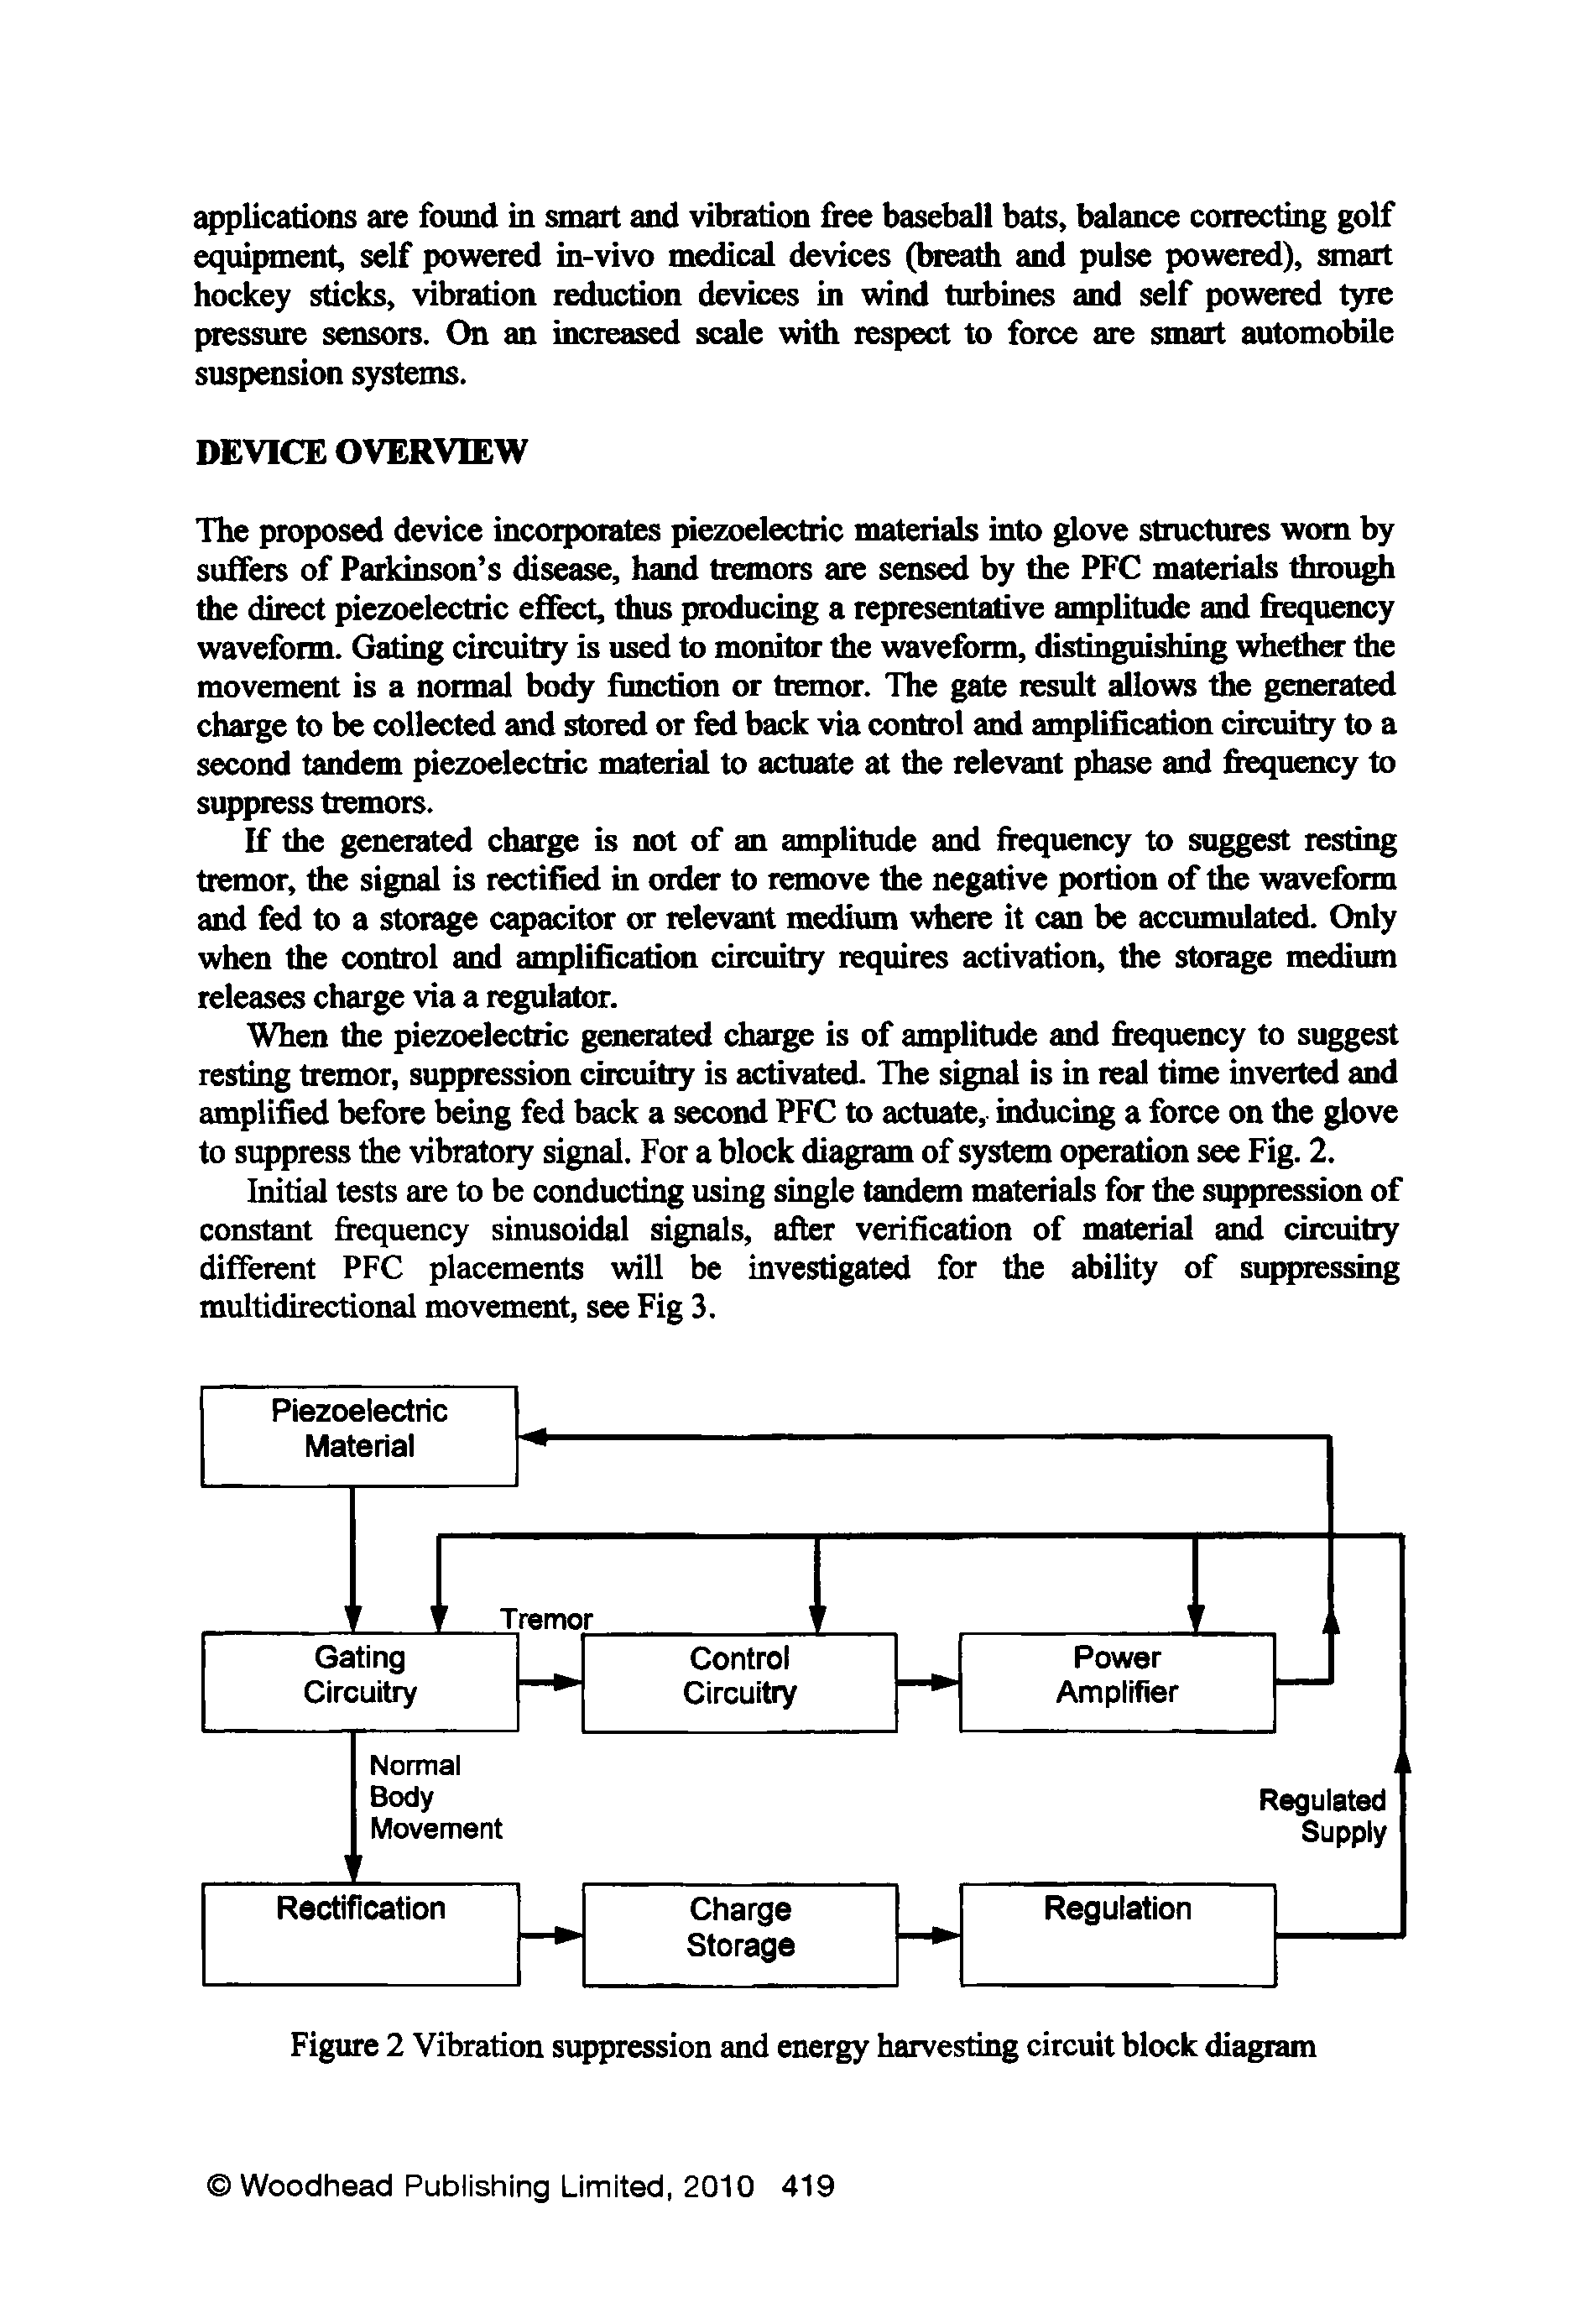 Figure 2 Vibration suppression and energy harvesting circuit block diagram...